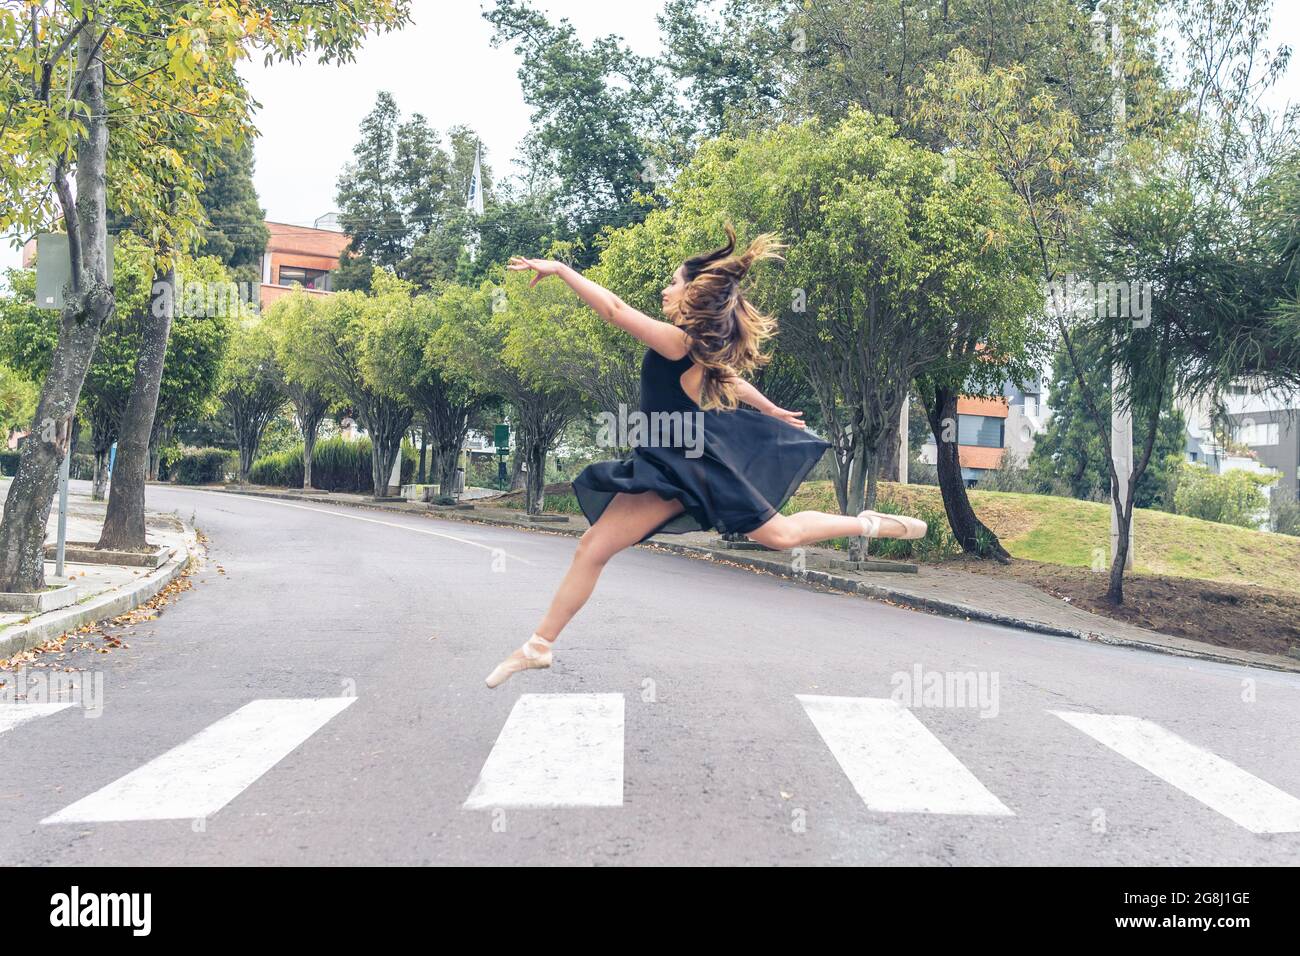 Ballet dancer running and dancing across a crosswalk on a street Stock Photo